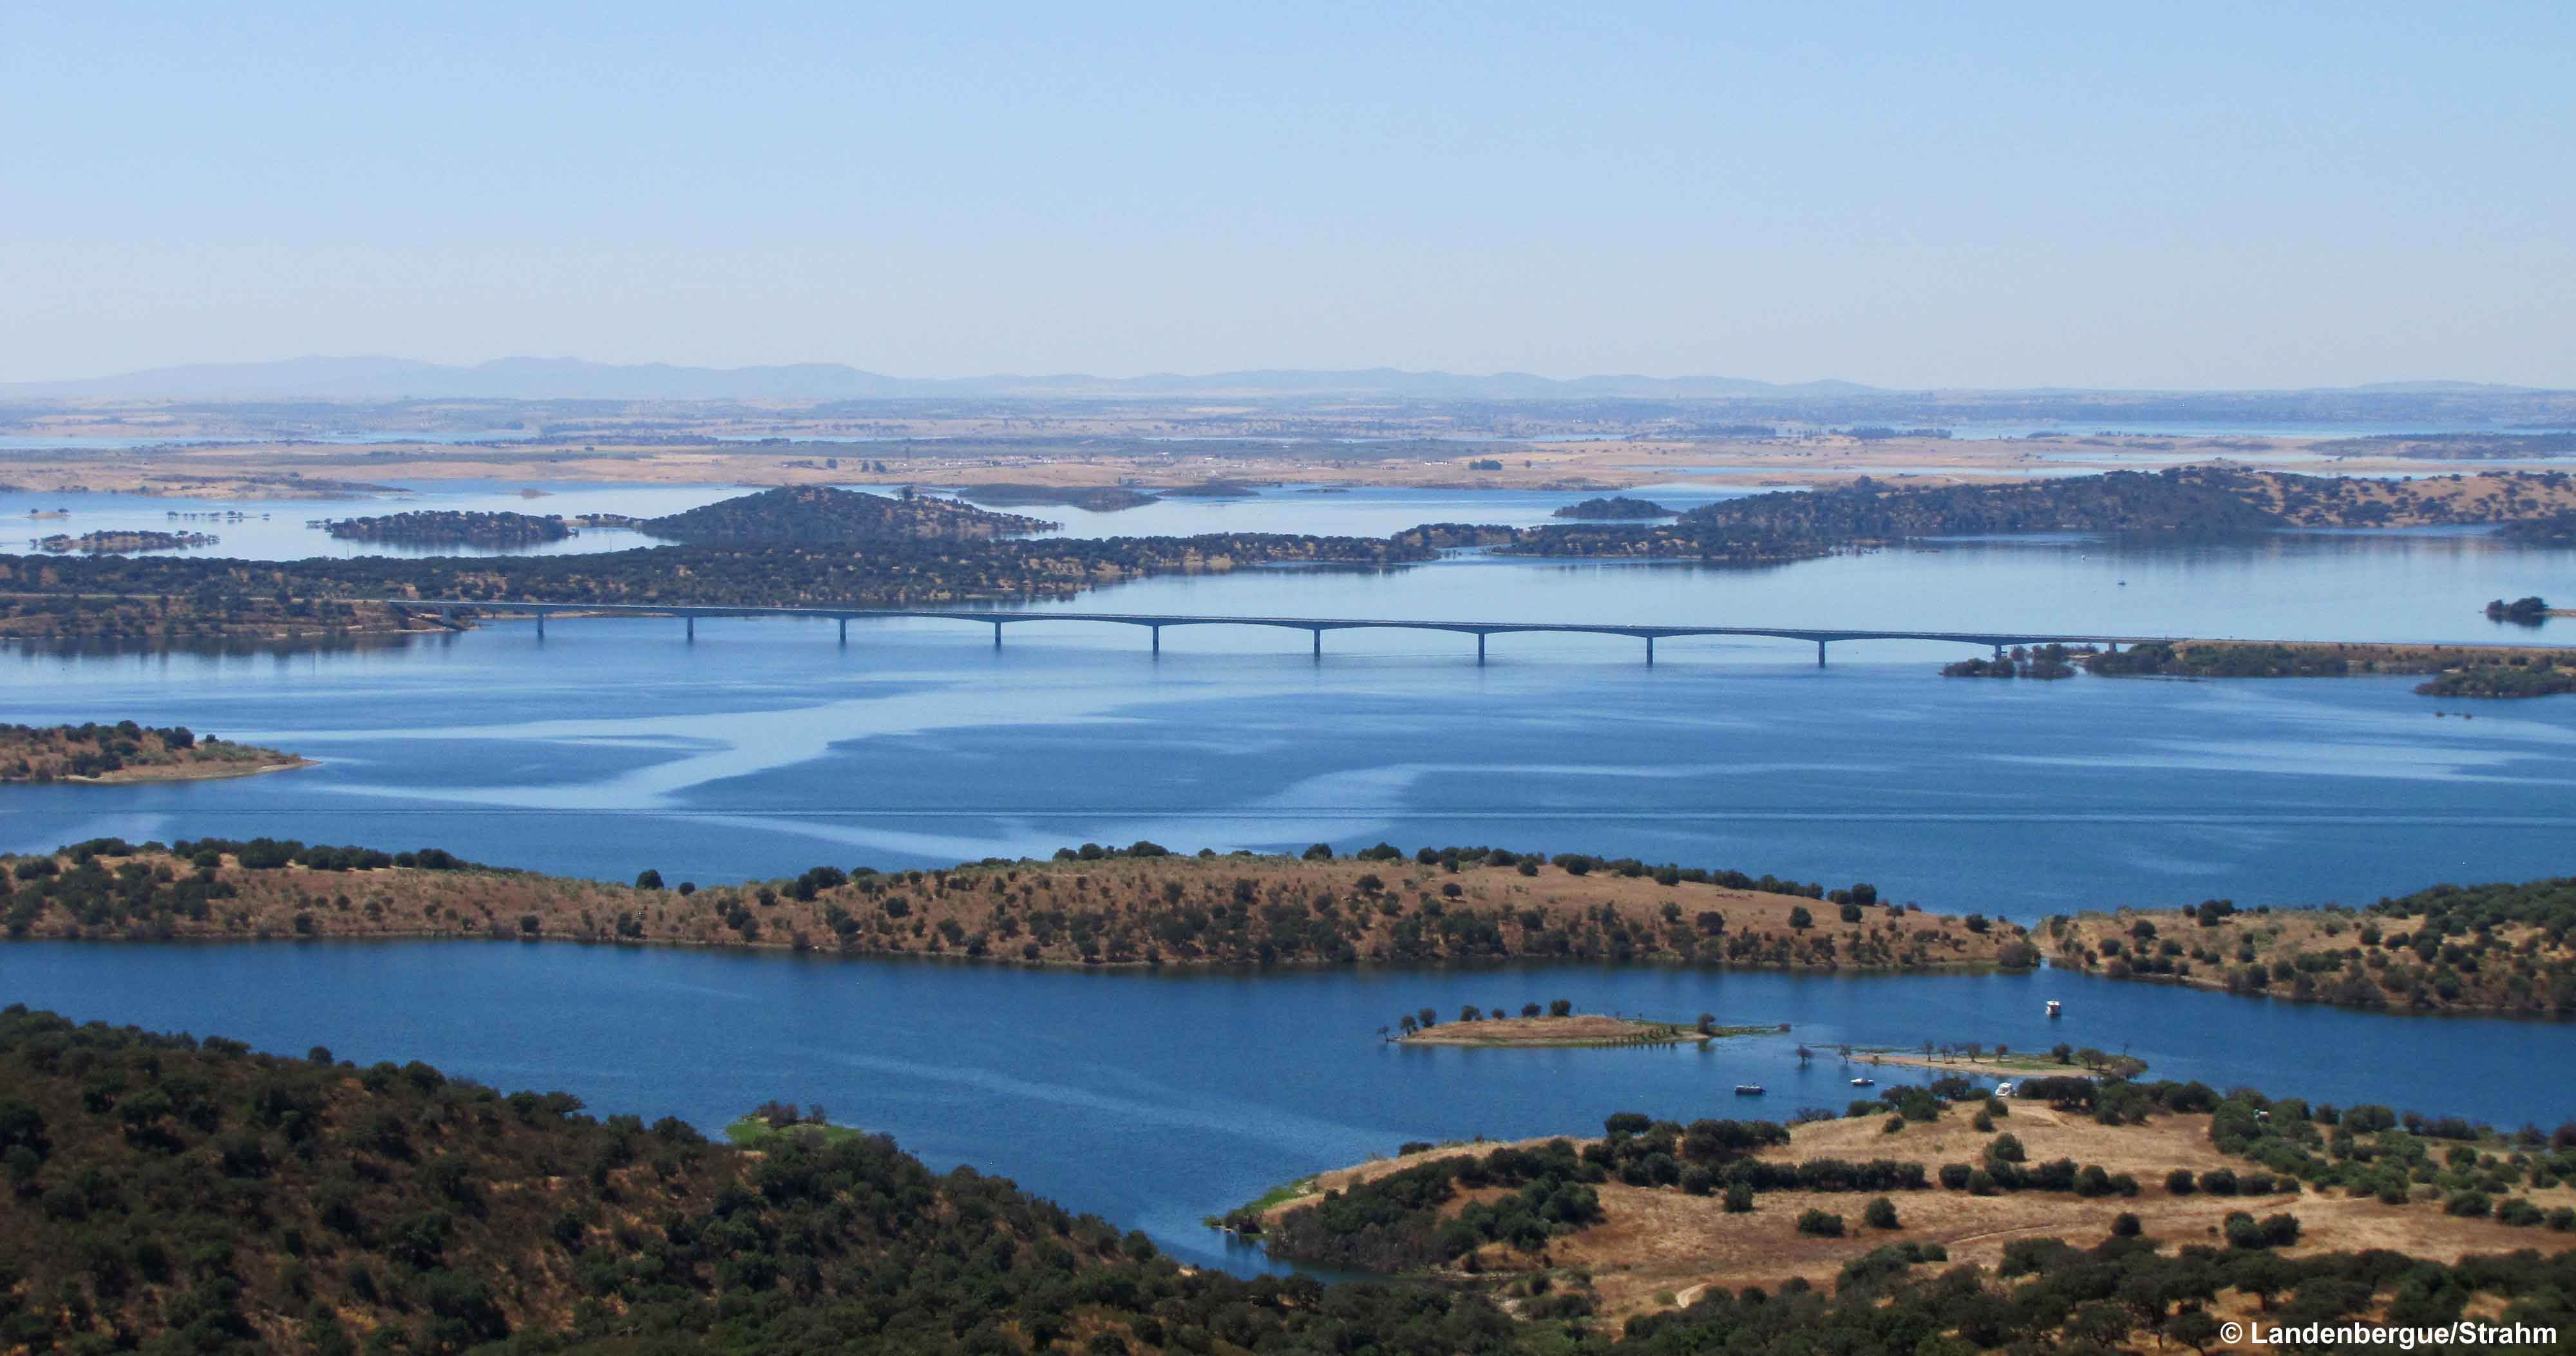 View of Alqueva reservoir from Monsarraz.